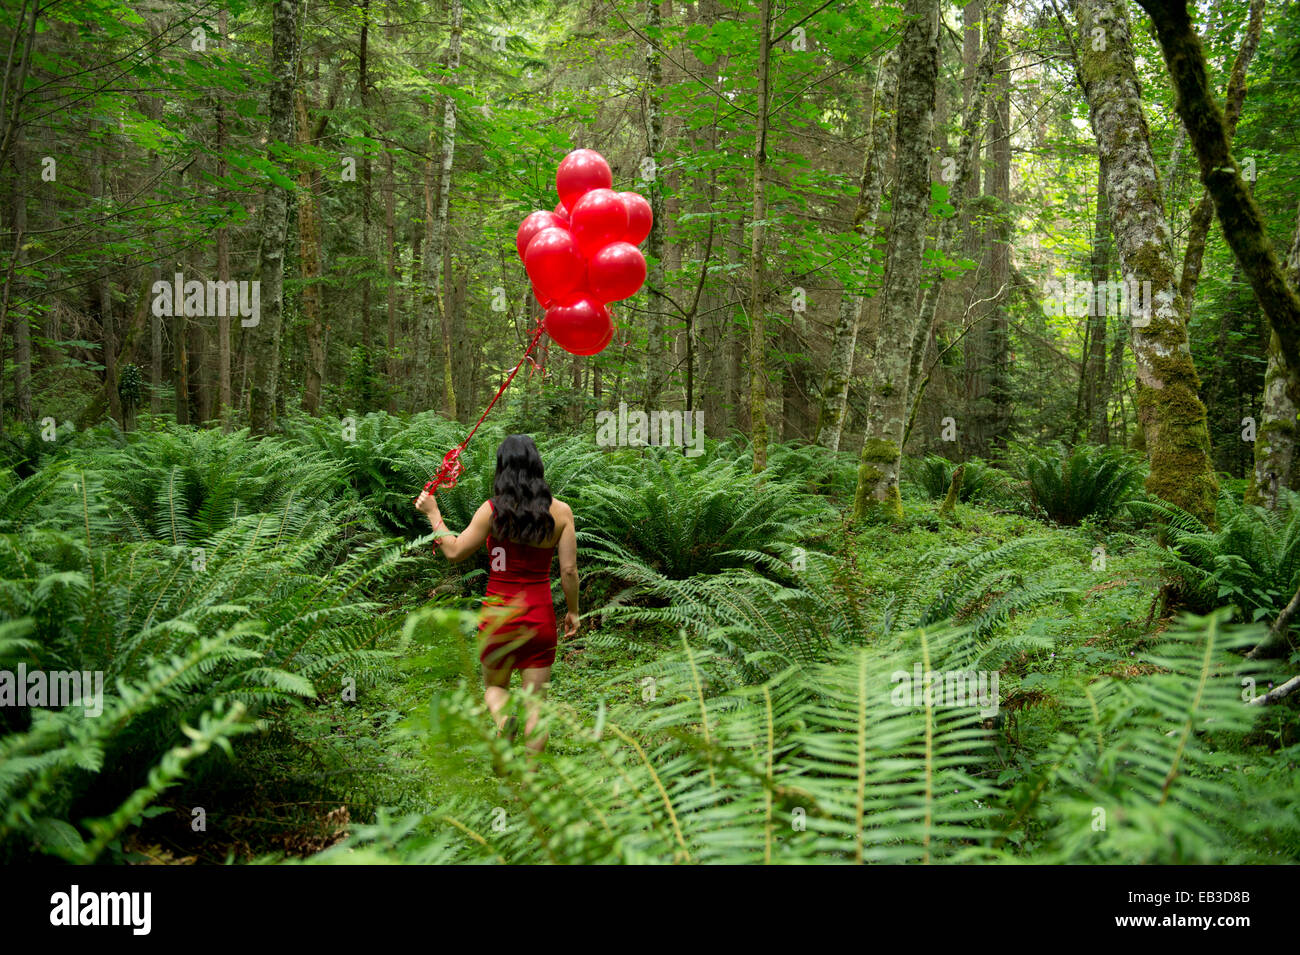 Korean woman holding red balloons dans une forêt luxuriante Banque D'Images